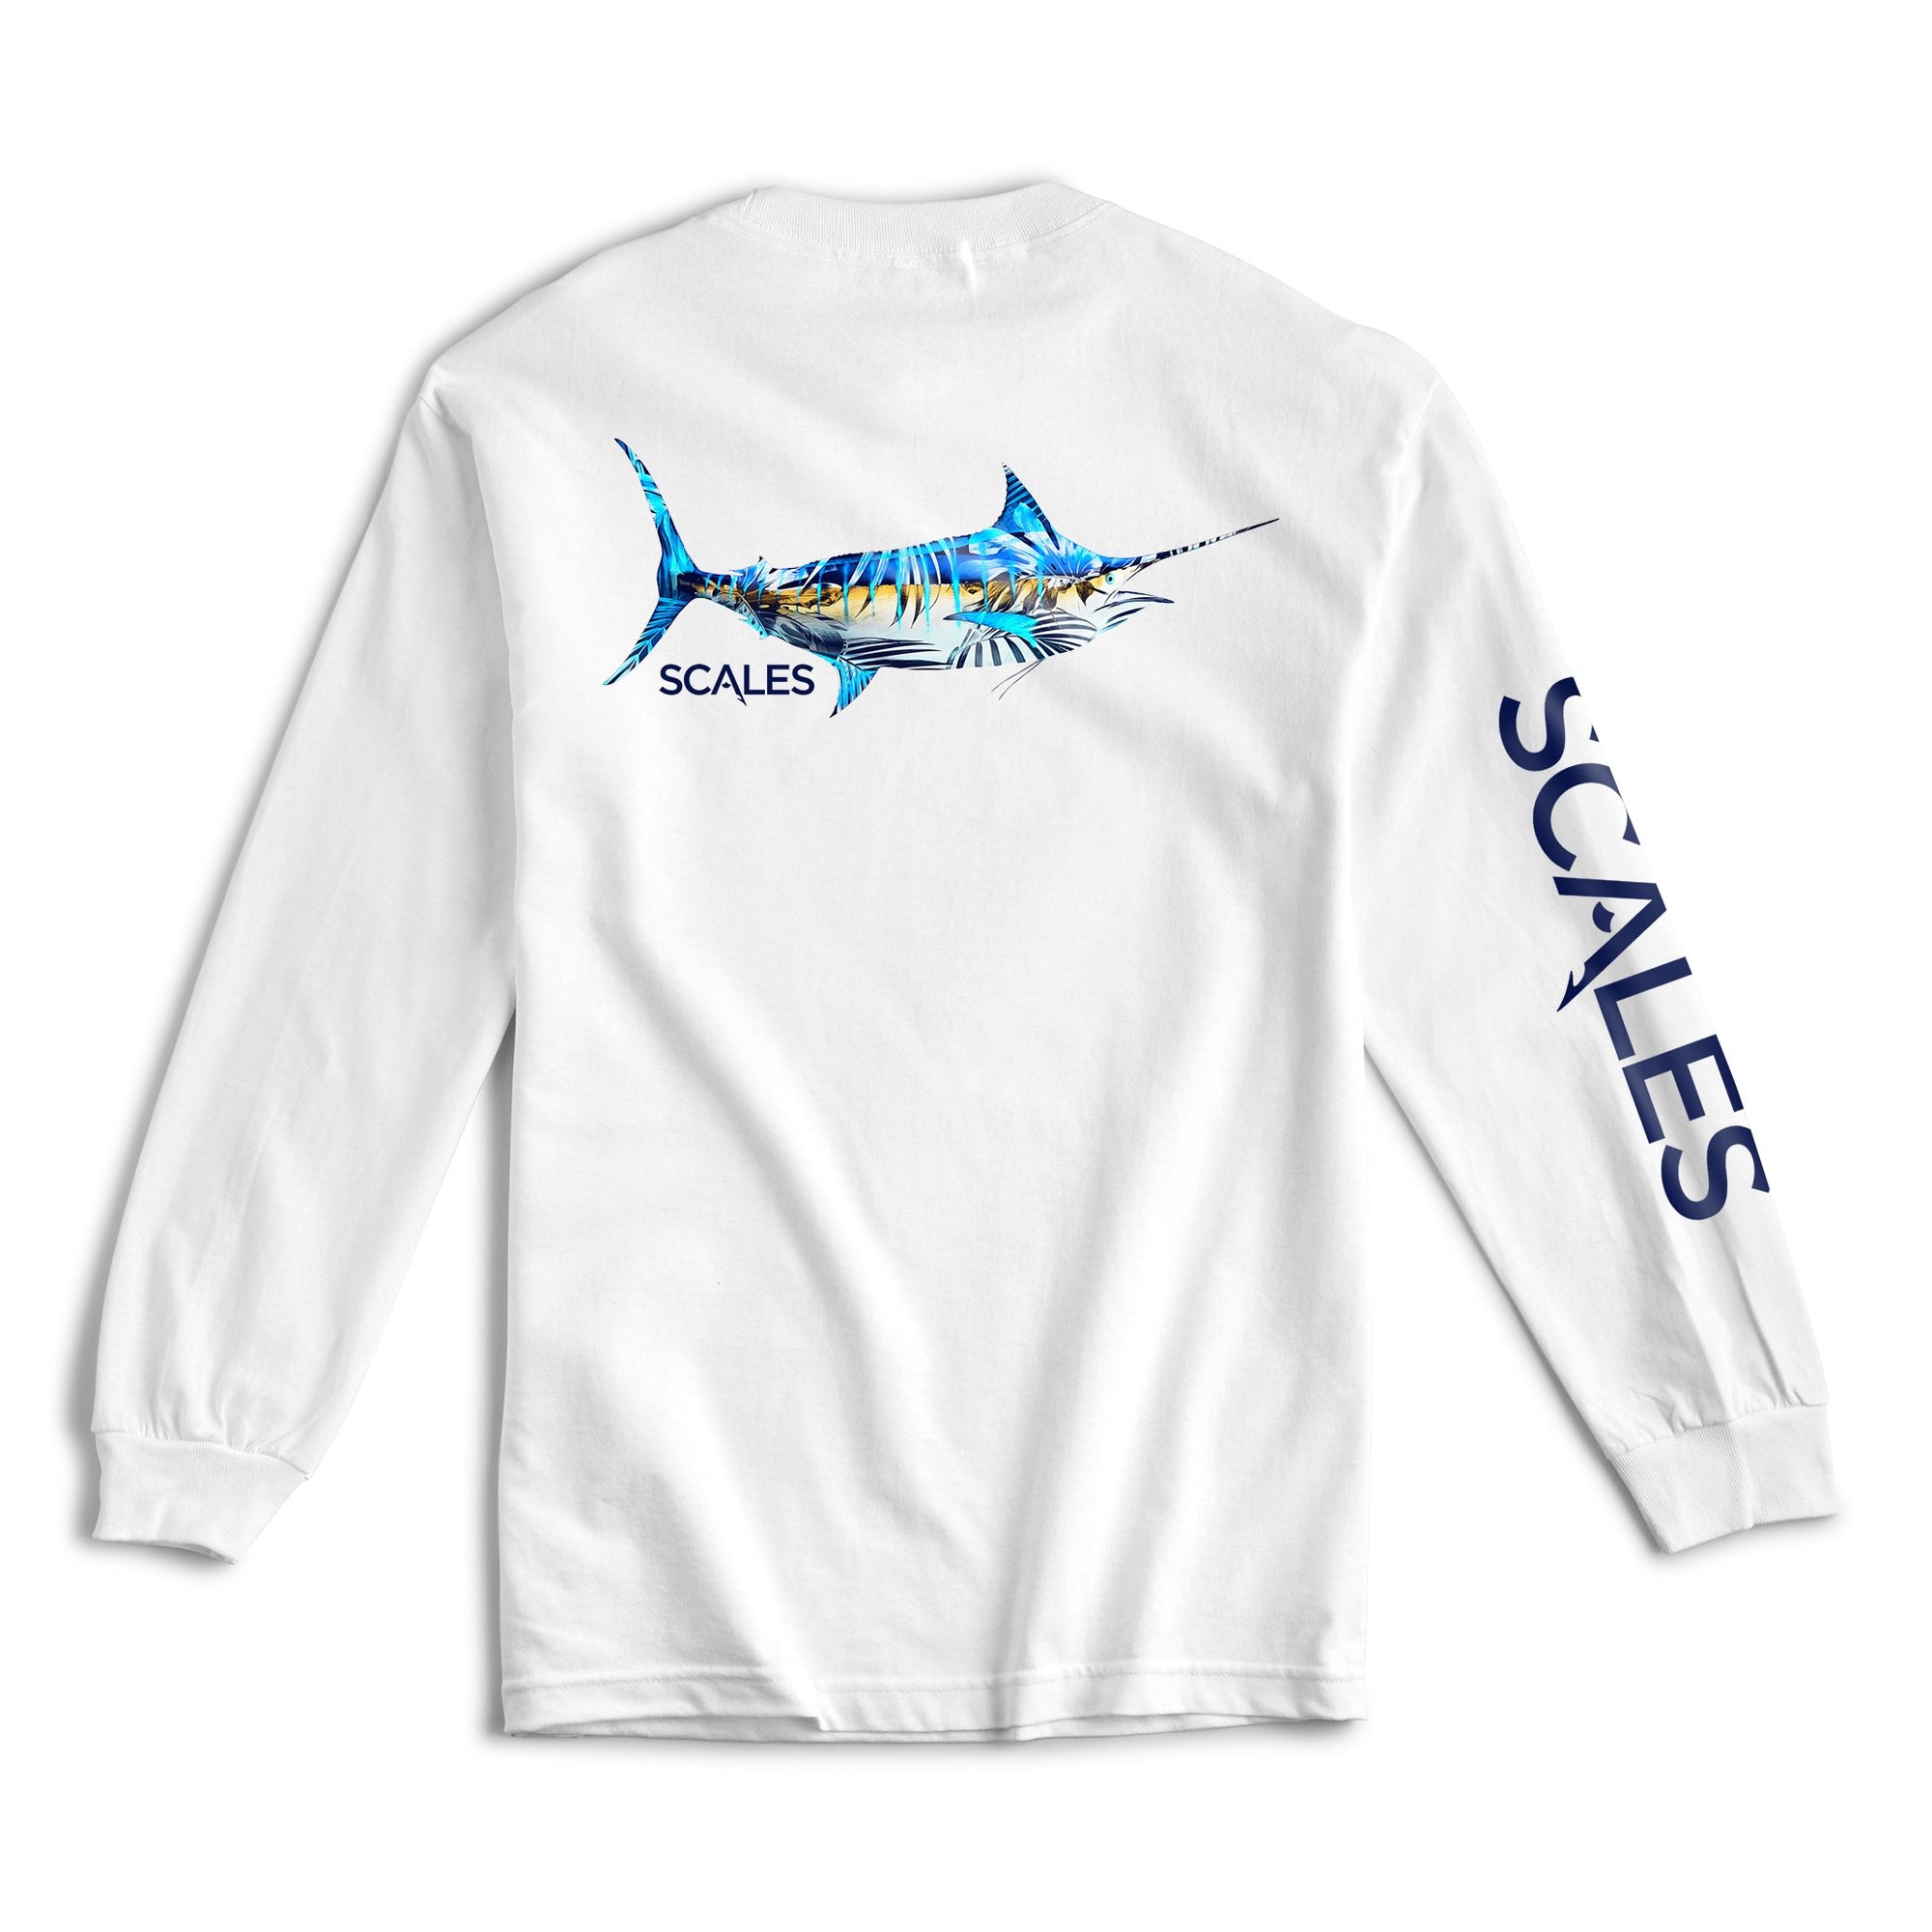 Scales Gear Tropical Marlin Long Sleeve White Shirt - Rear View